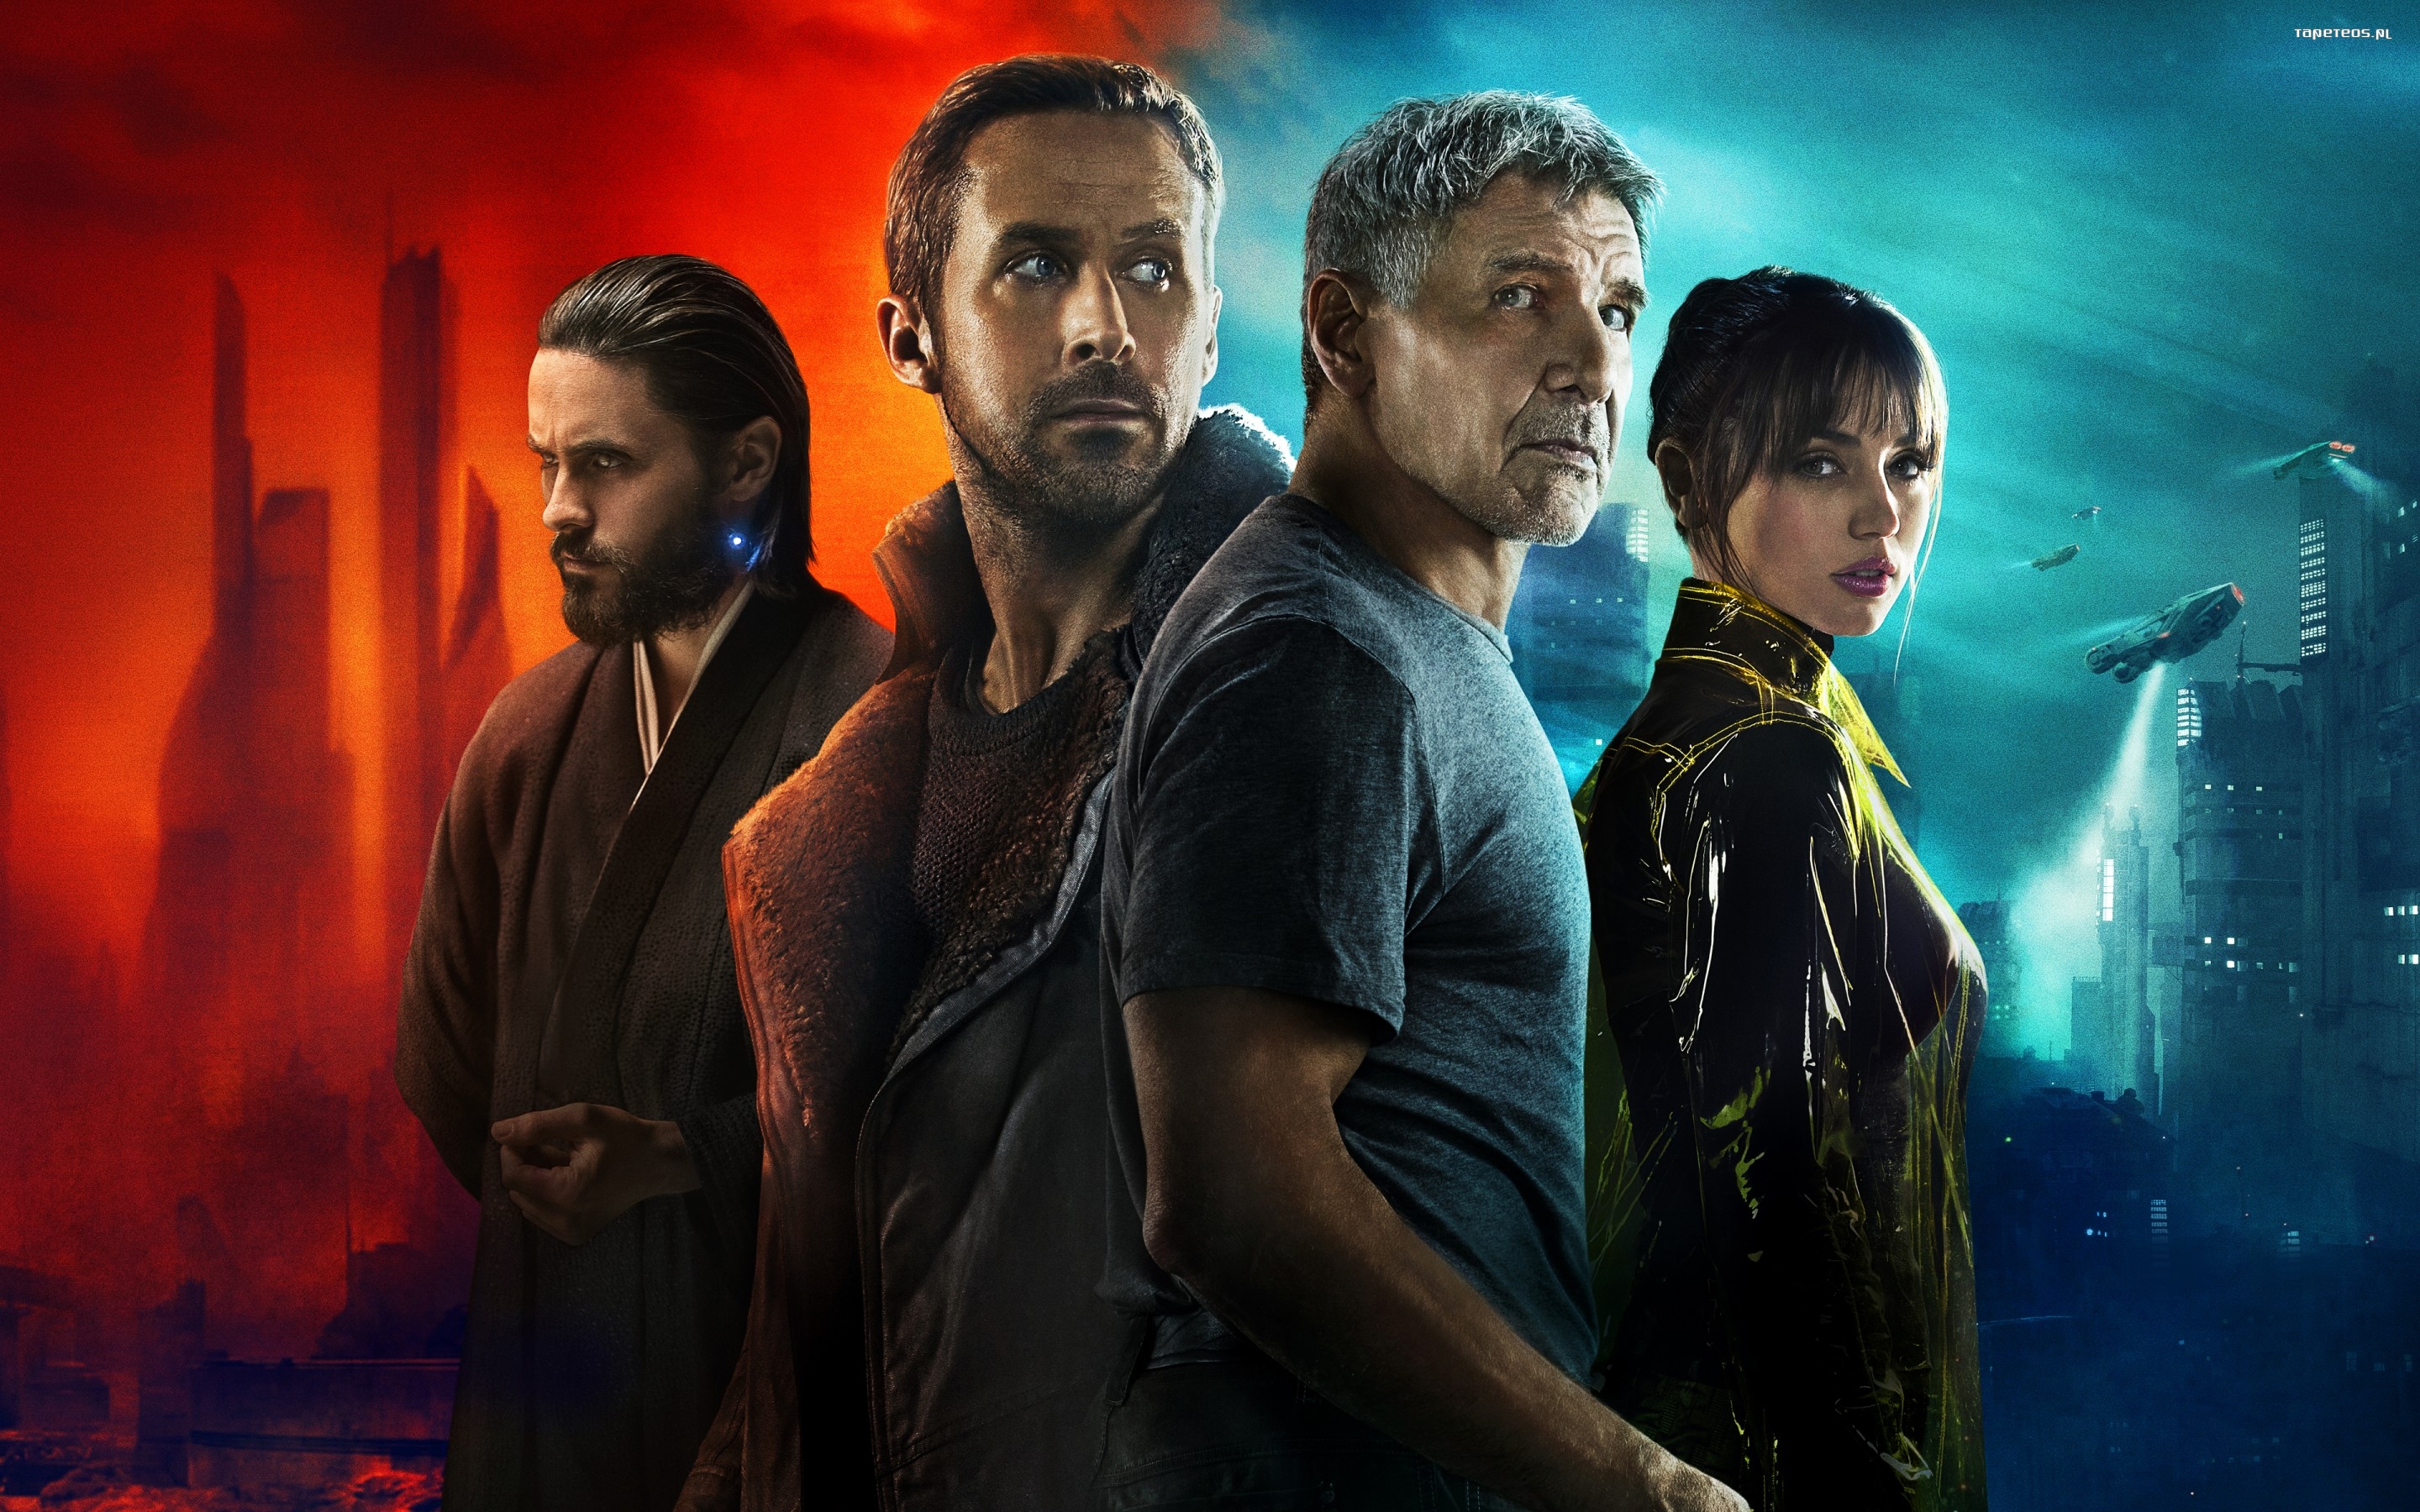 Blade Runner 2049 (2017) 002 Jared Leto, Ryan Gosling, Harrison Ford, Ana de Armas